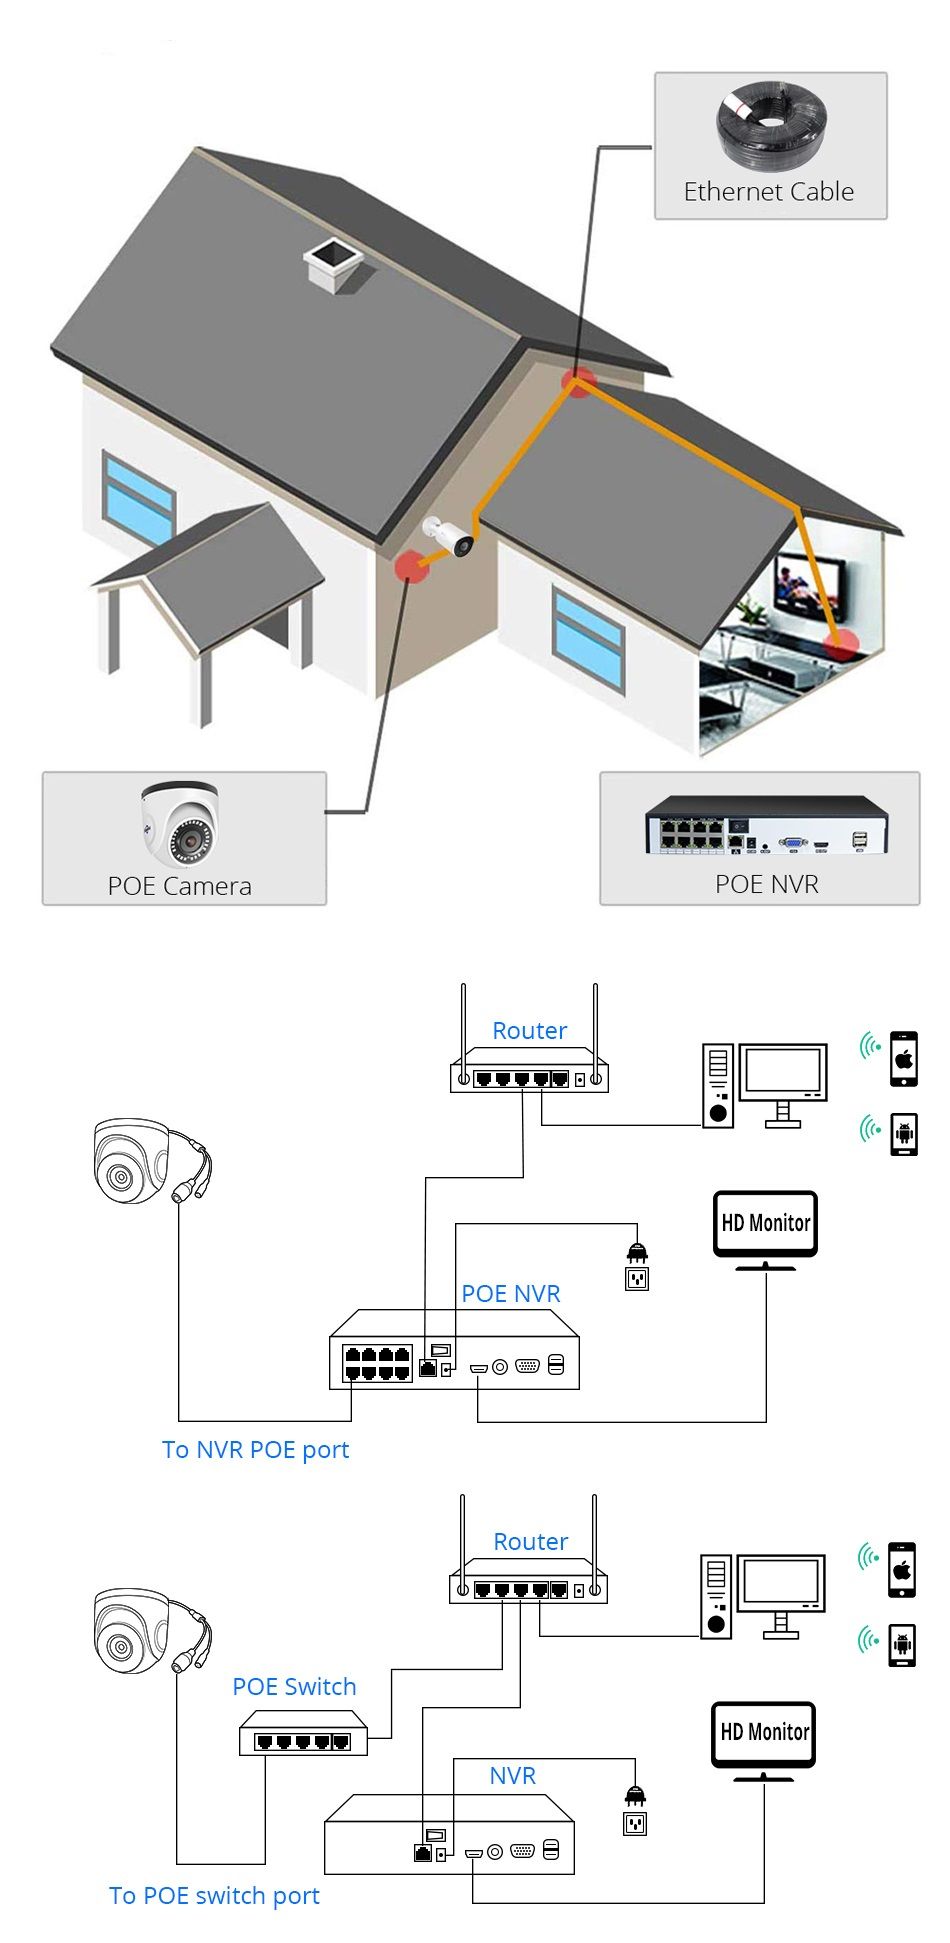 Hiseeu-4K-POE-IP-Camera-Audio-8MP-Metal-Case-Waterproof-Network-Dome-Security-CCTV-Camera-IR-H265-ON-1621764